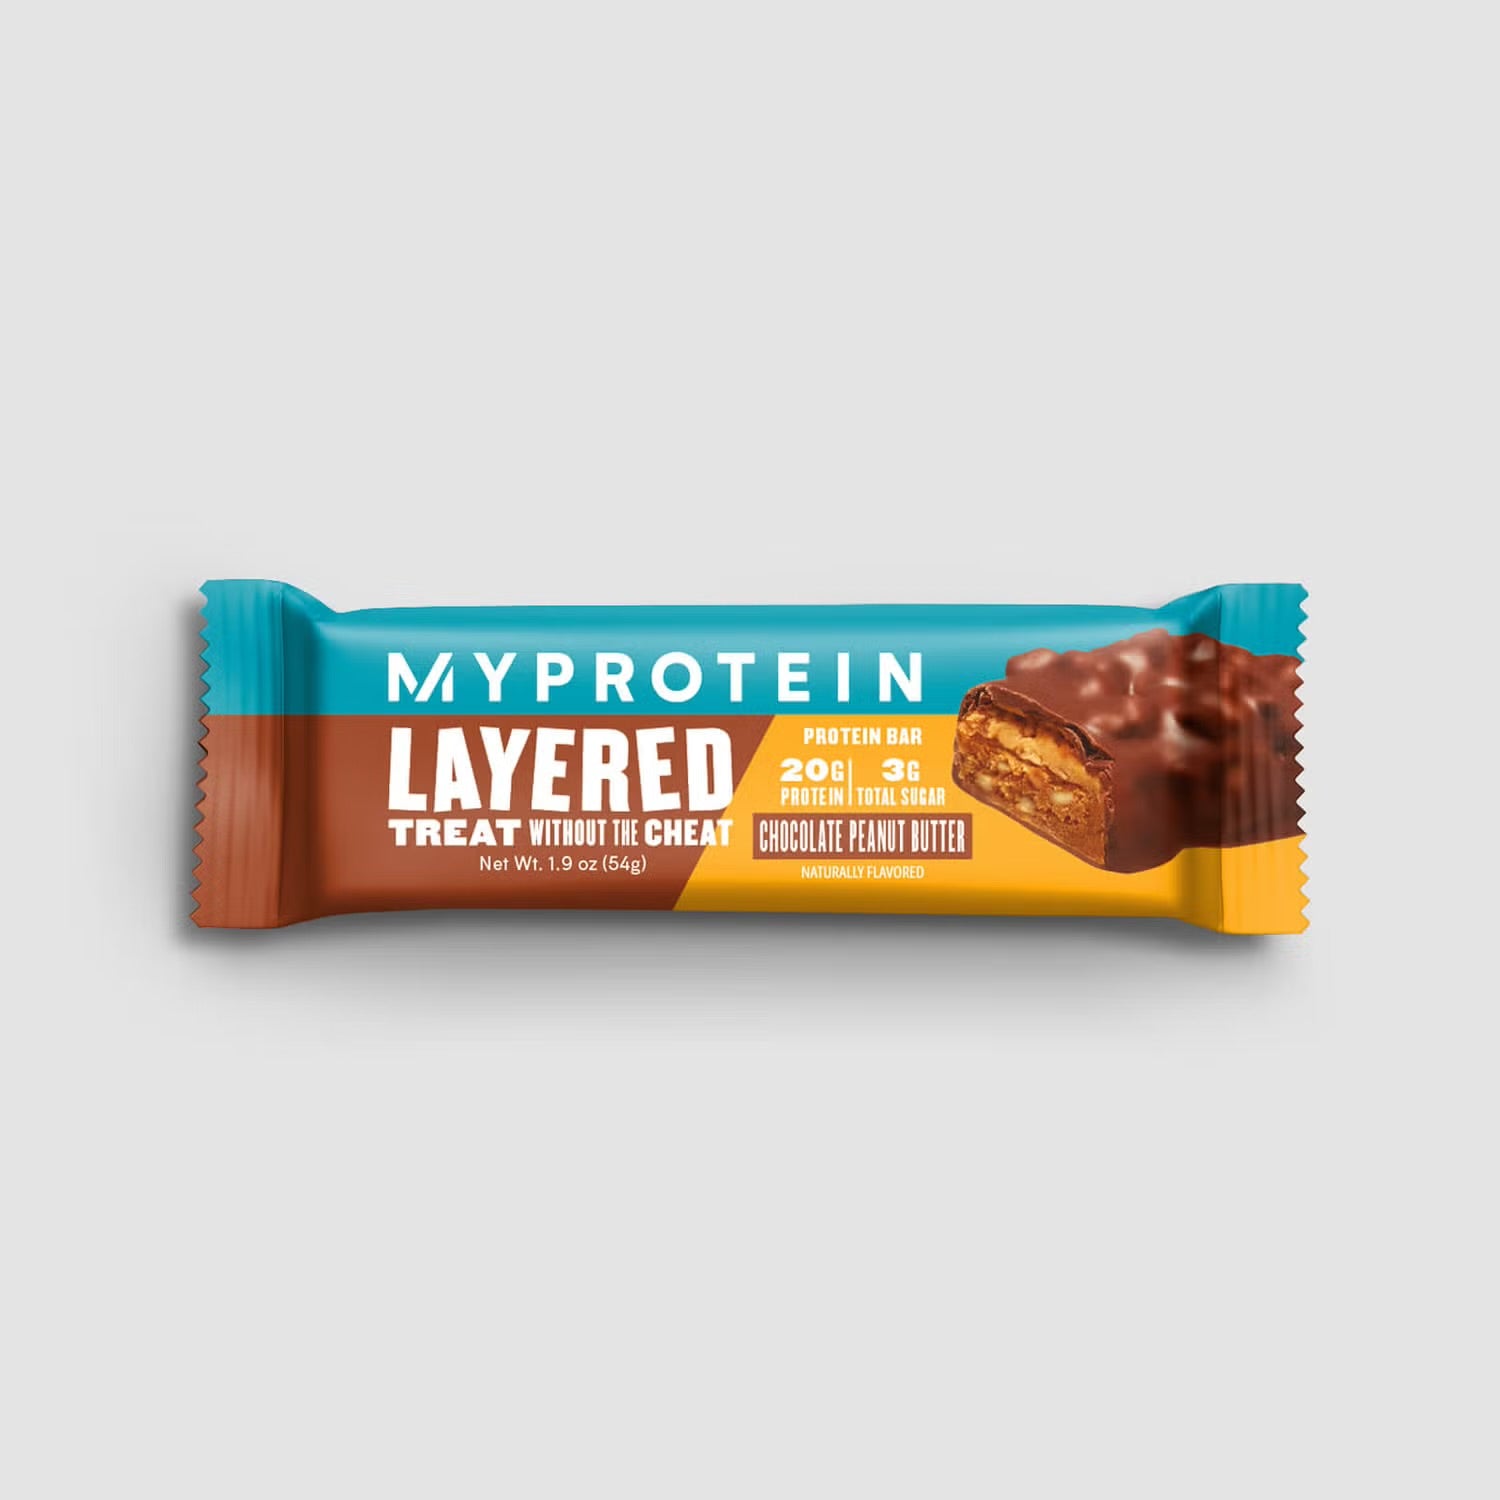 MyProtein Layered Protein Bar (1 bar)